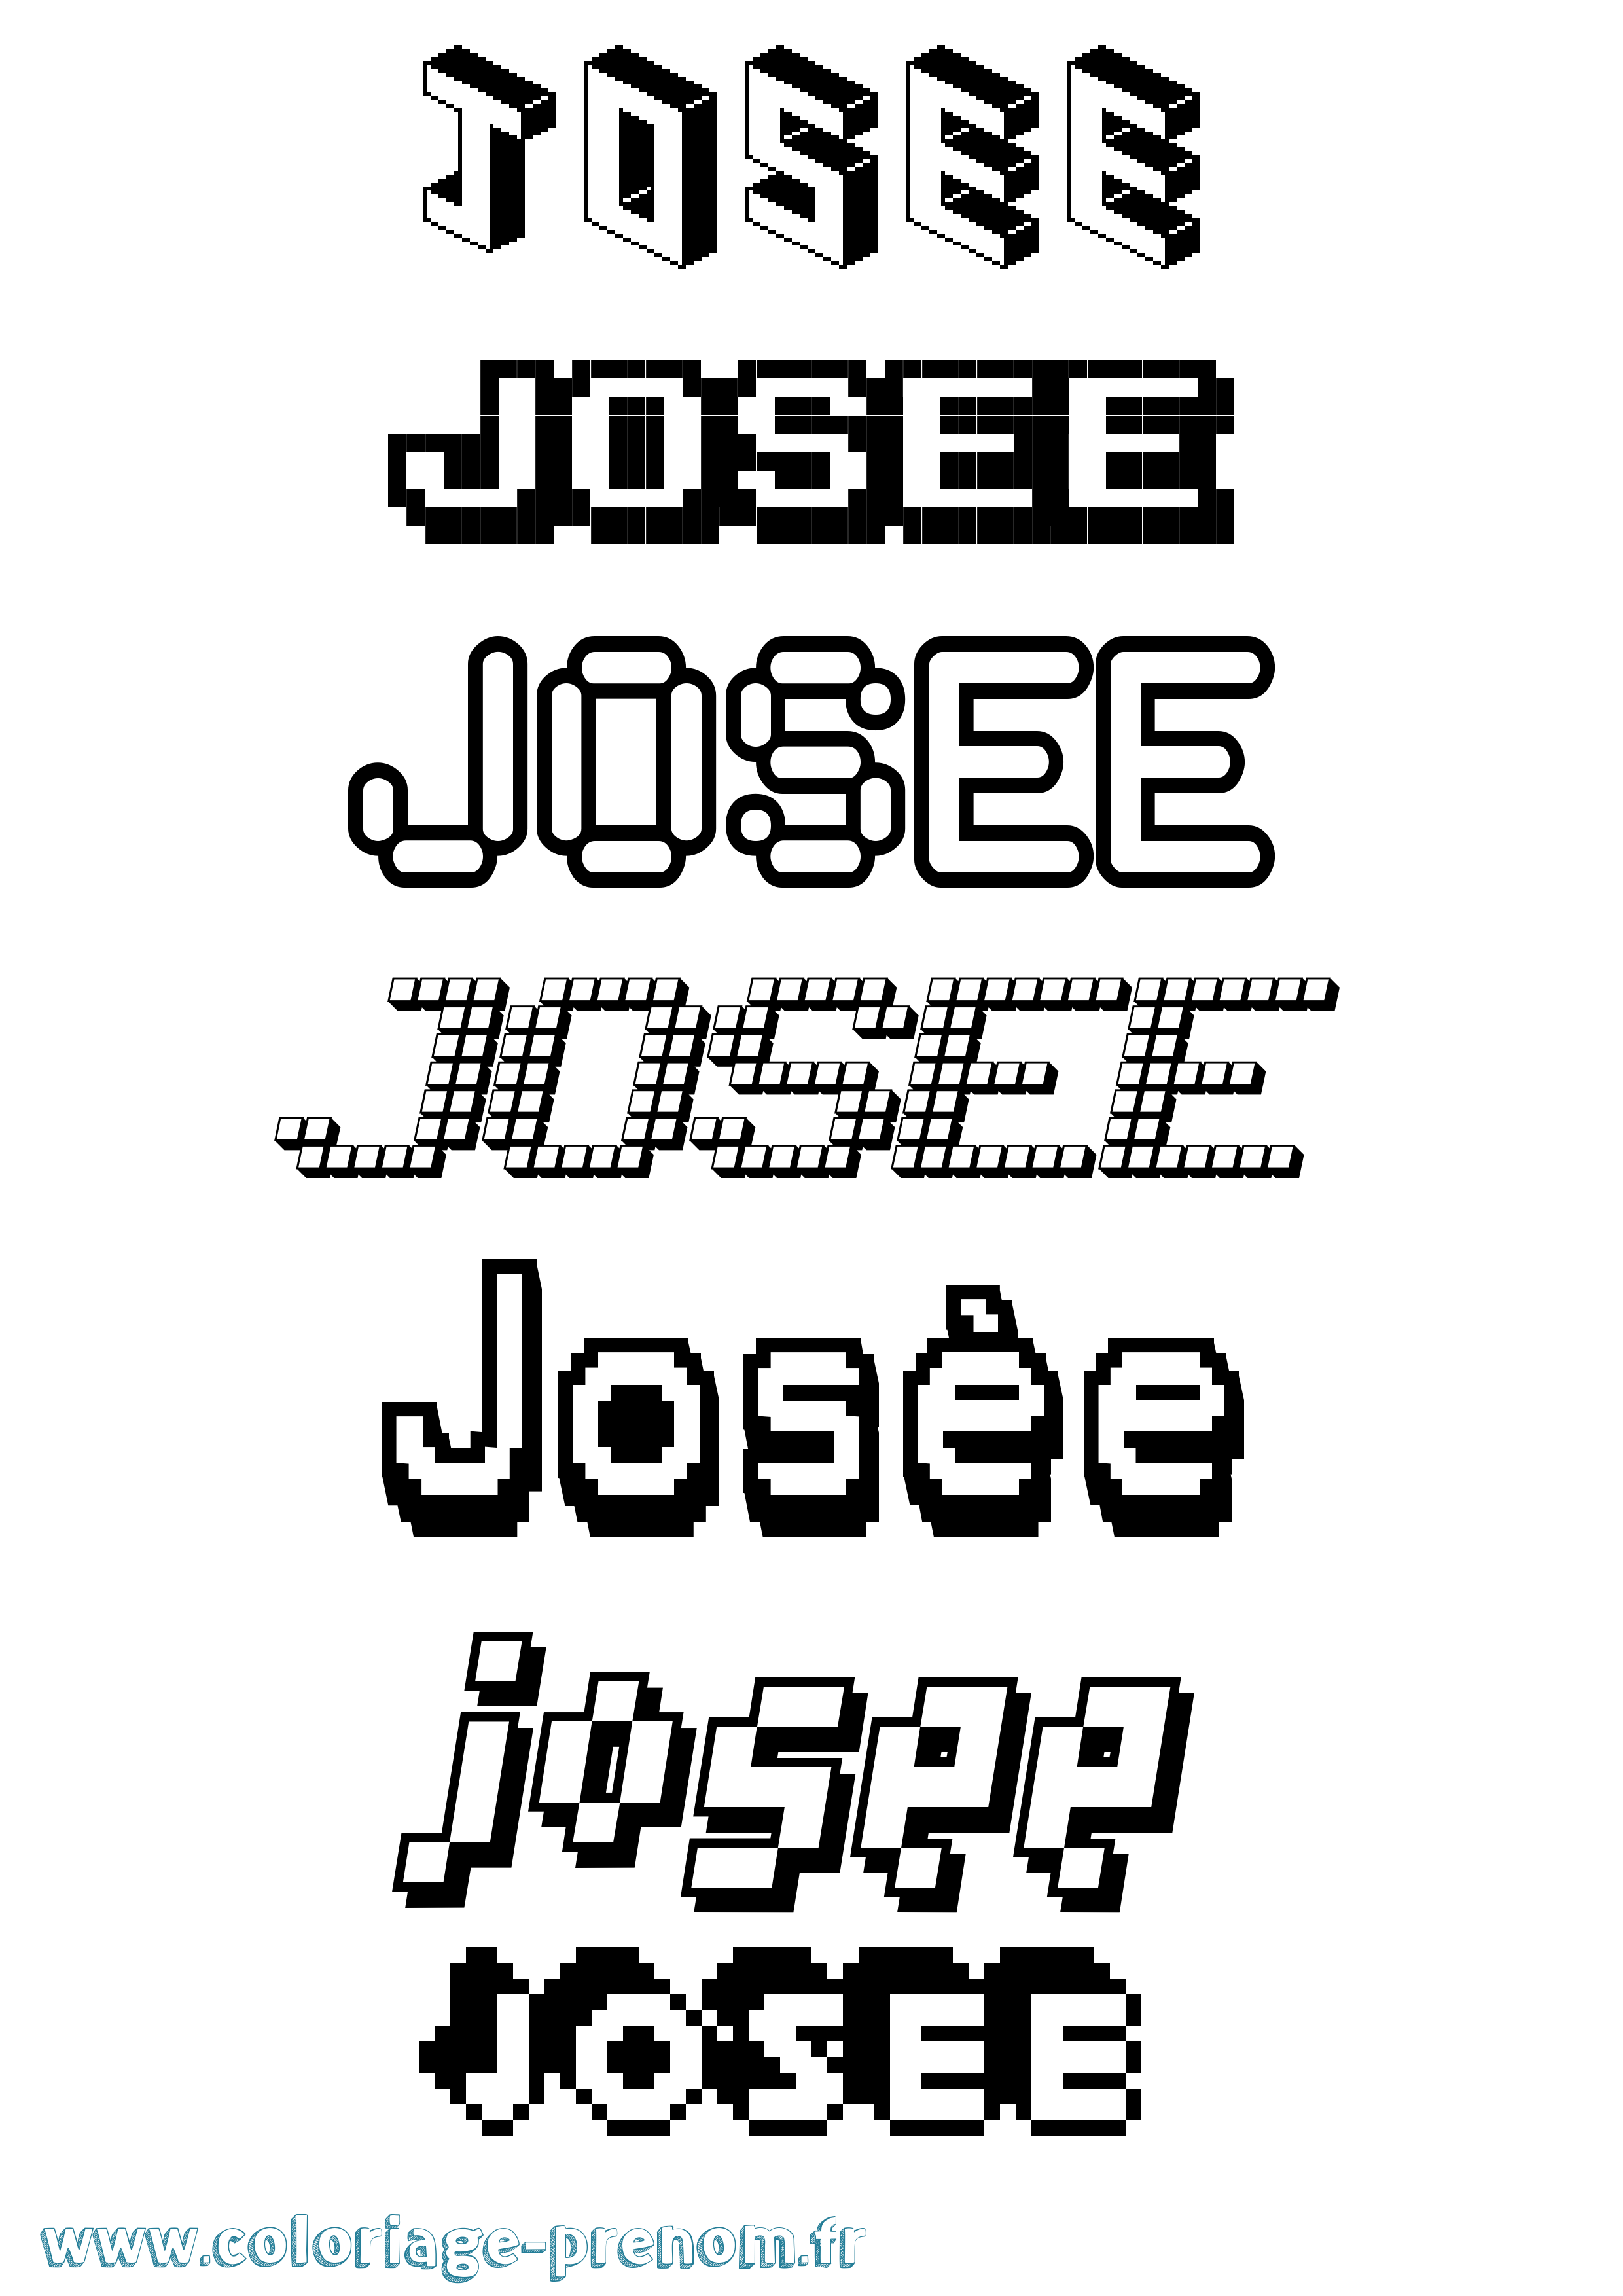 Coloriage prénom Josée Pixel